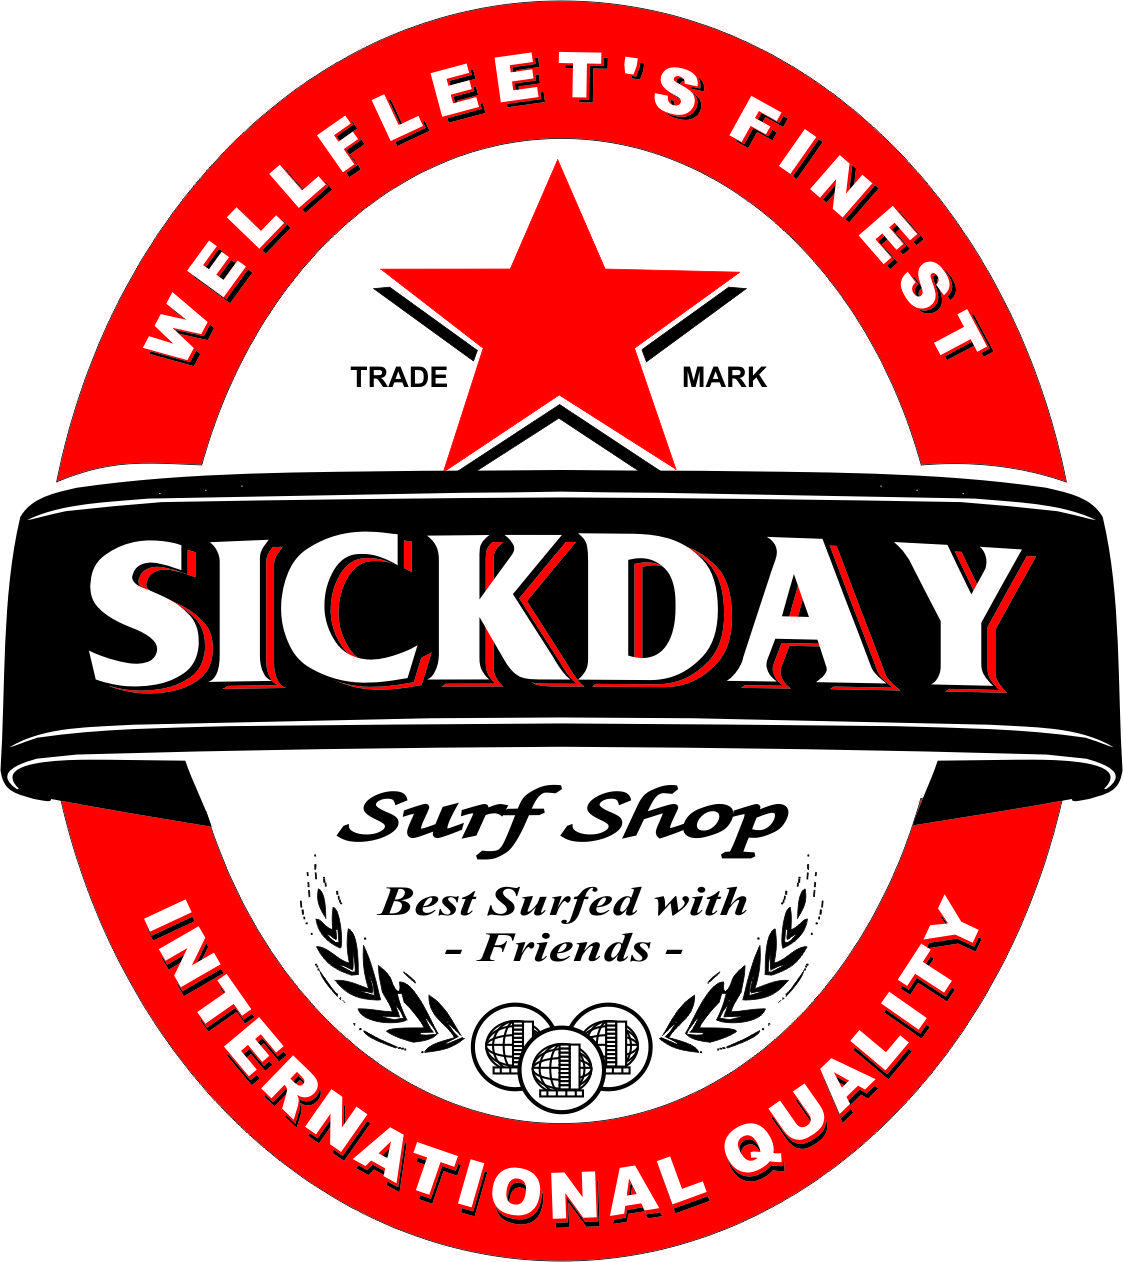 Storm Surf Company Logo - SICKDAY Surf Shop Bingtang Logo Sticker - SICKDAY, INC.